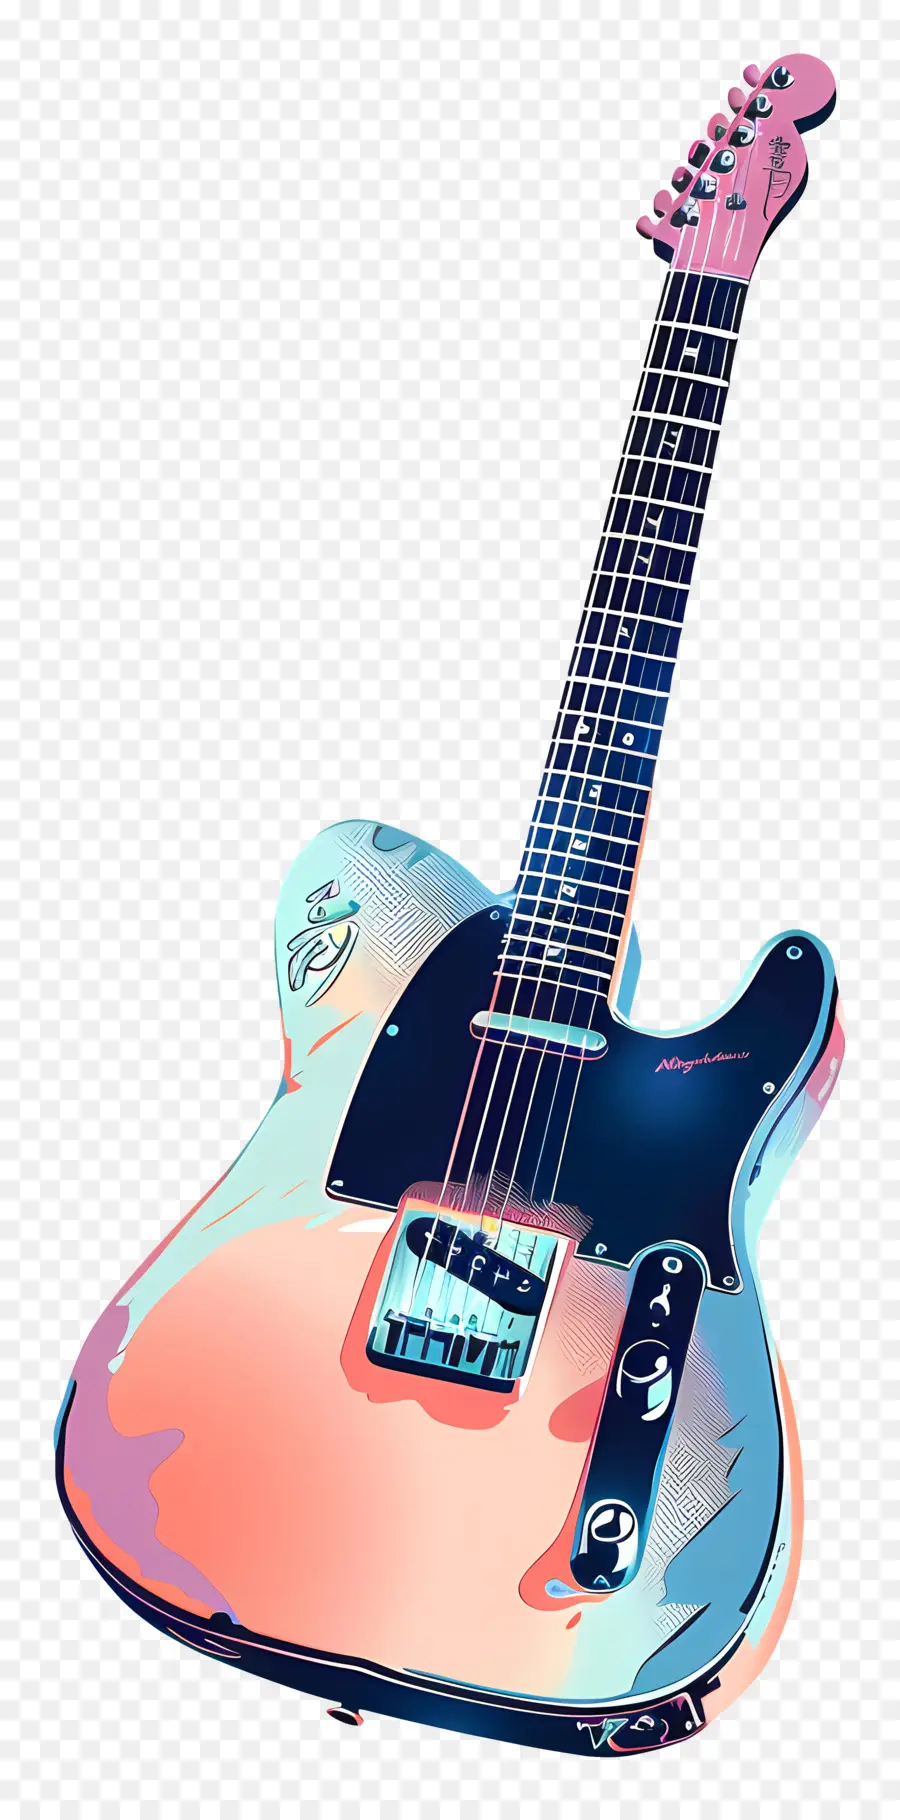 Guitarra Eléctrica，Fender Telecaster PNG